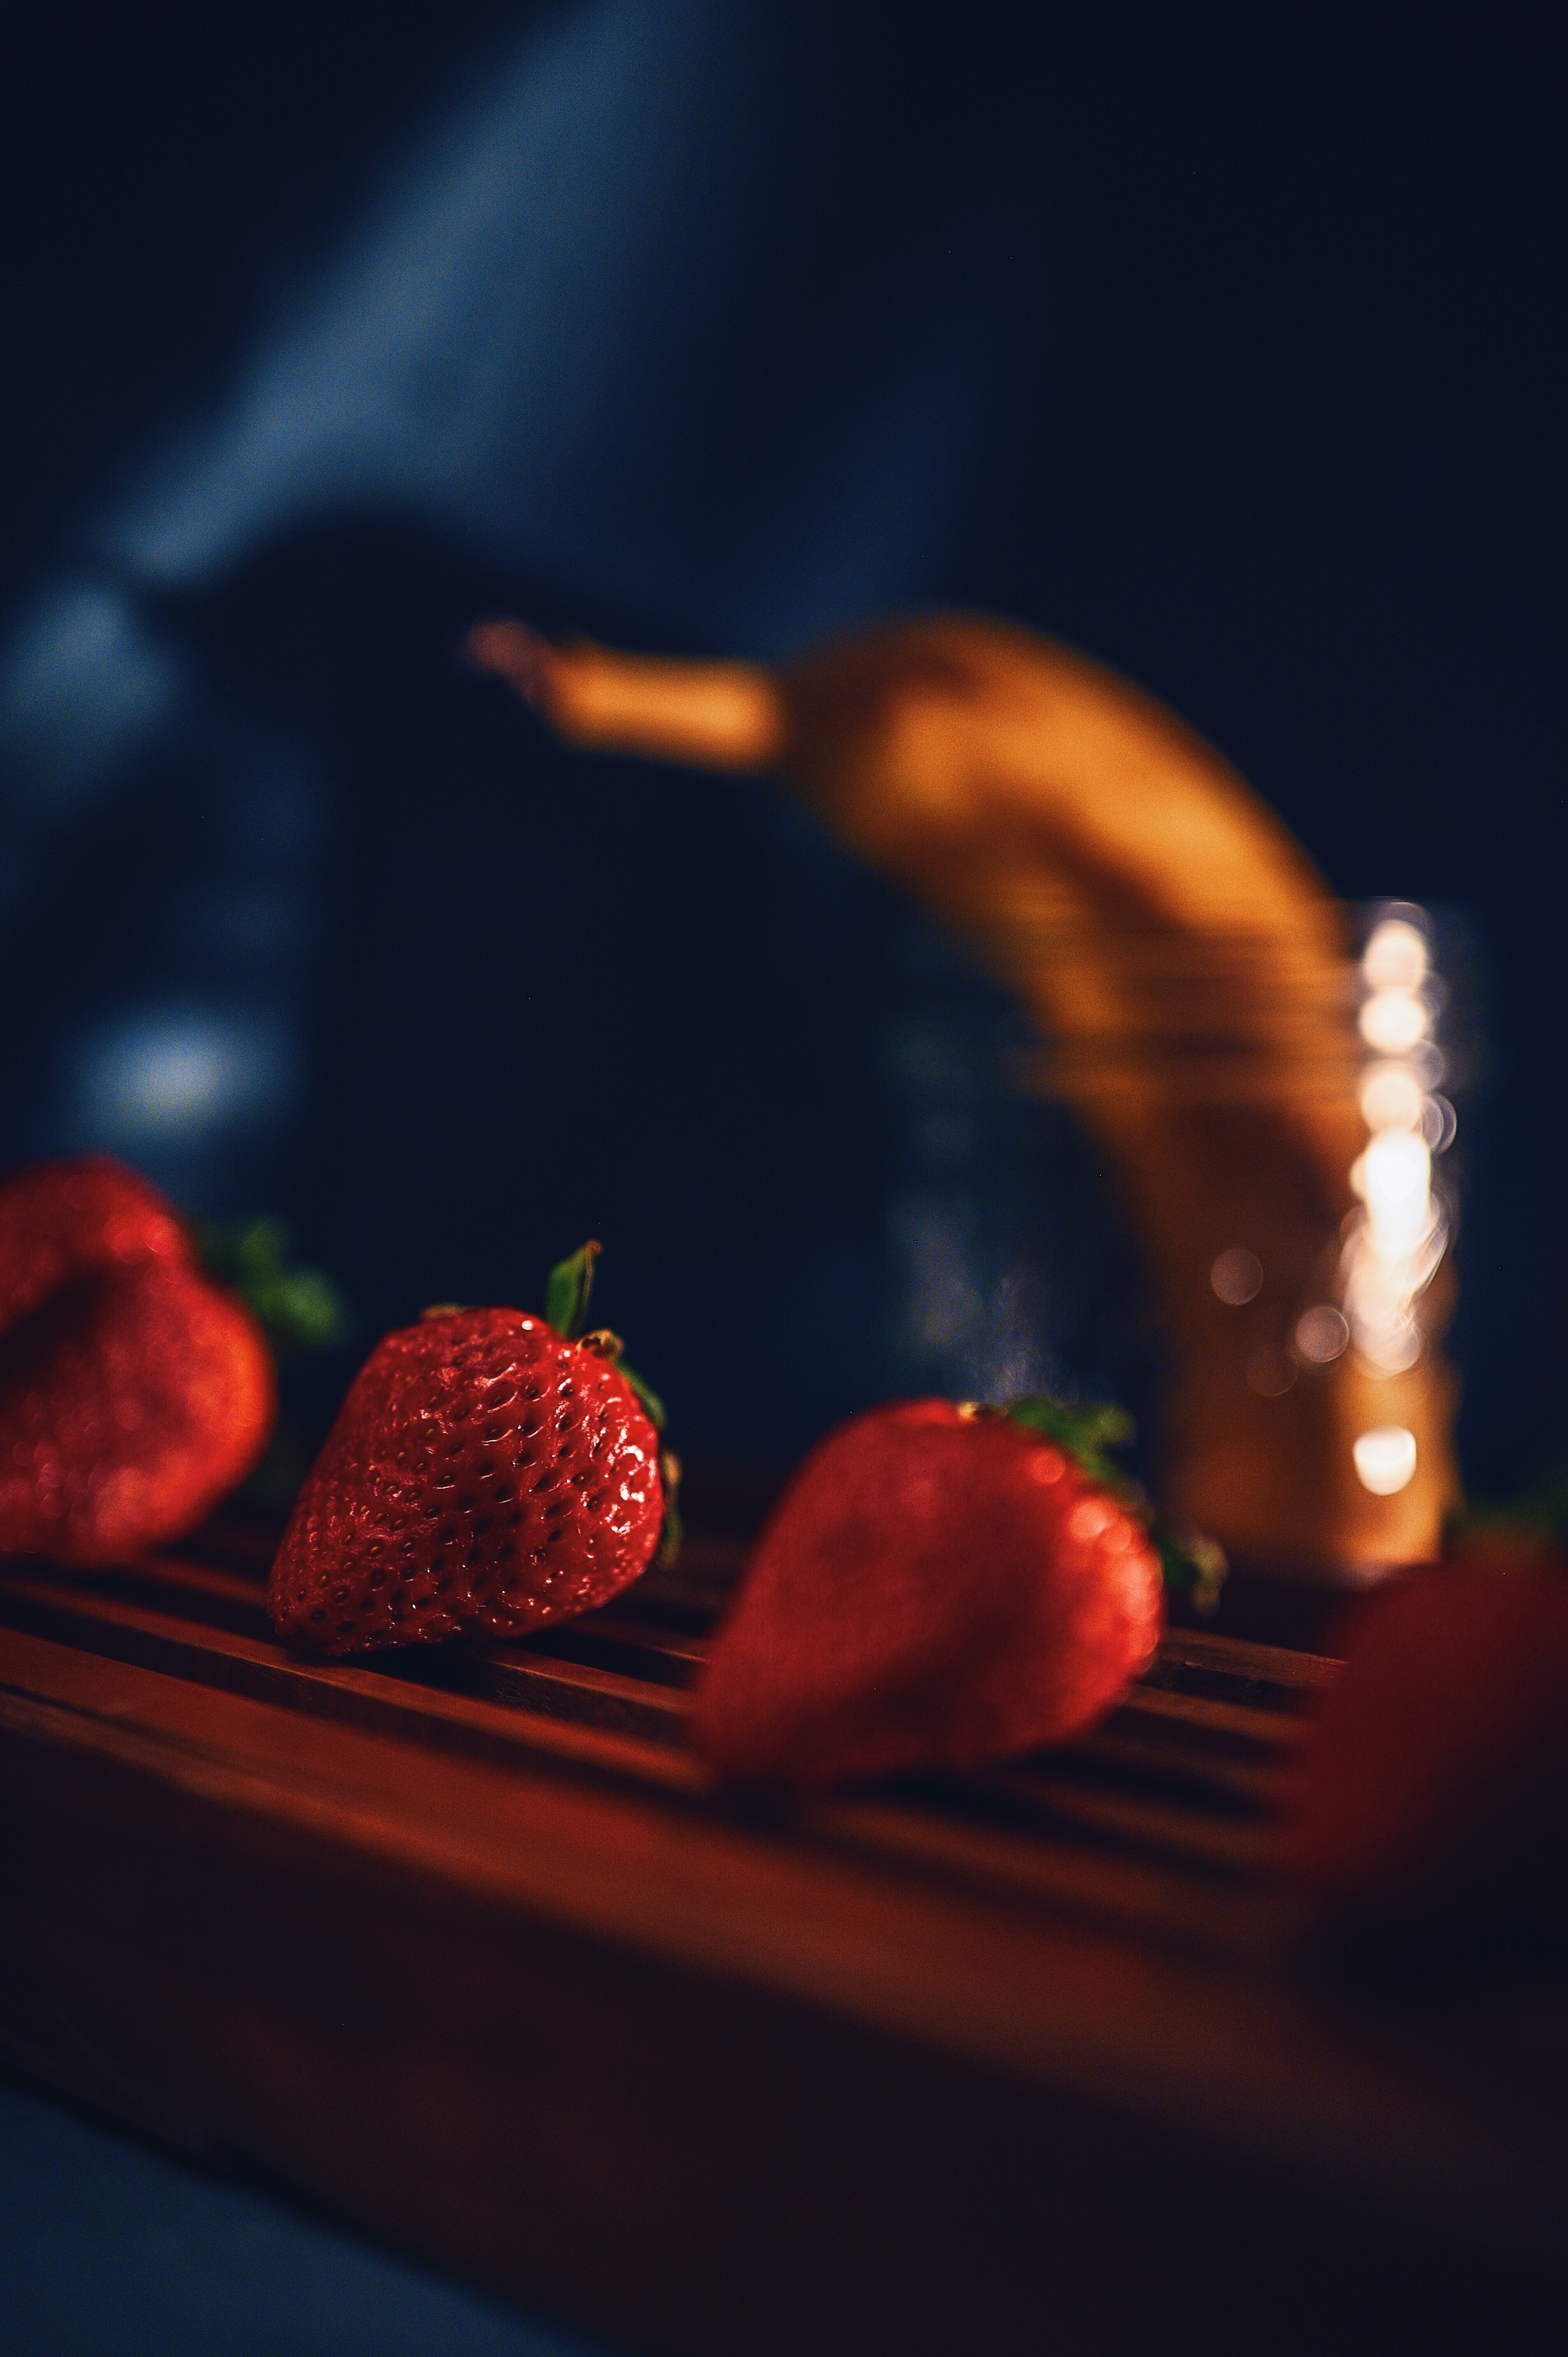 122645 Hintergrundbild herunterladen erdbeere, berries, rot, makro, reif, saftig - Bildschirmschoner und Bilder kostenlos